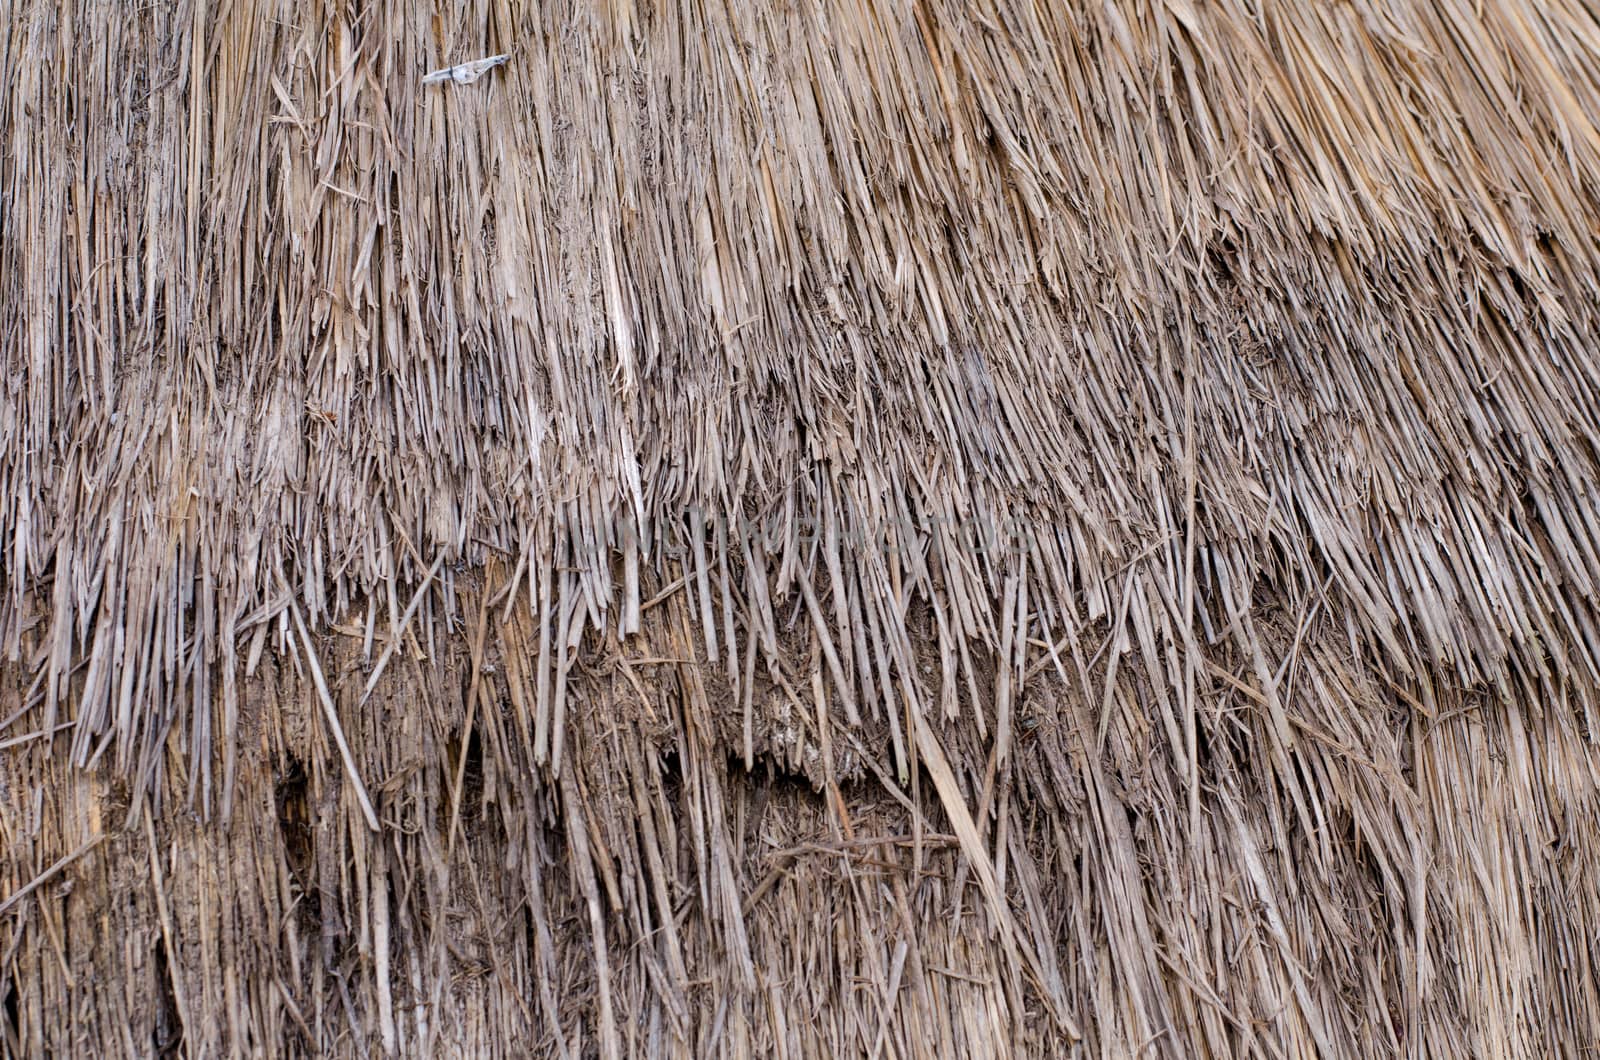 Dry straw pattern, background